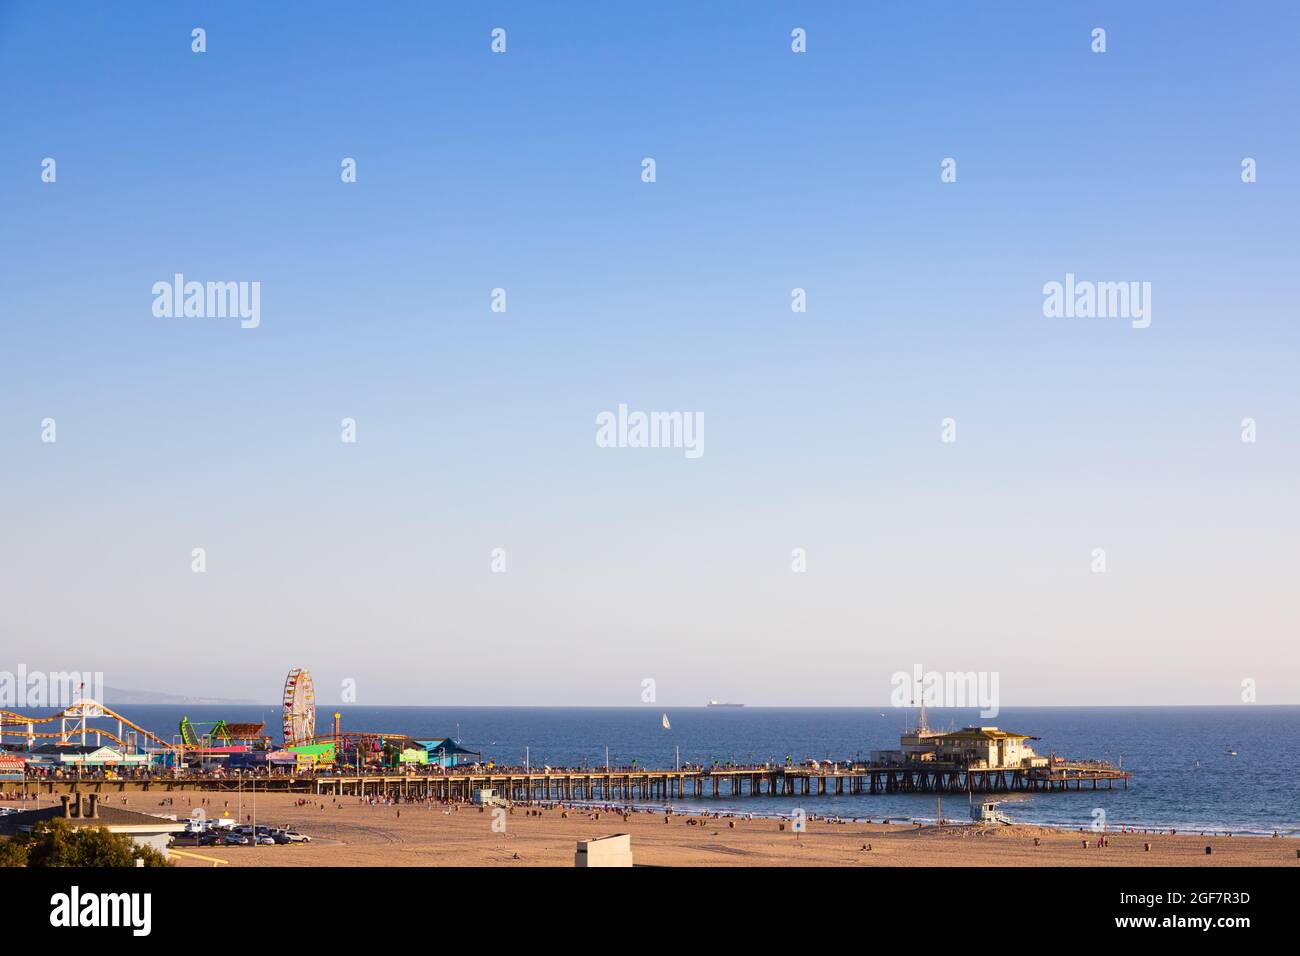 Santa Monica pier, Santa Monica, Los Angeles, California, United States of America. Stock Photo